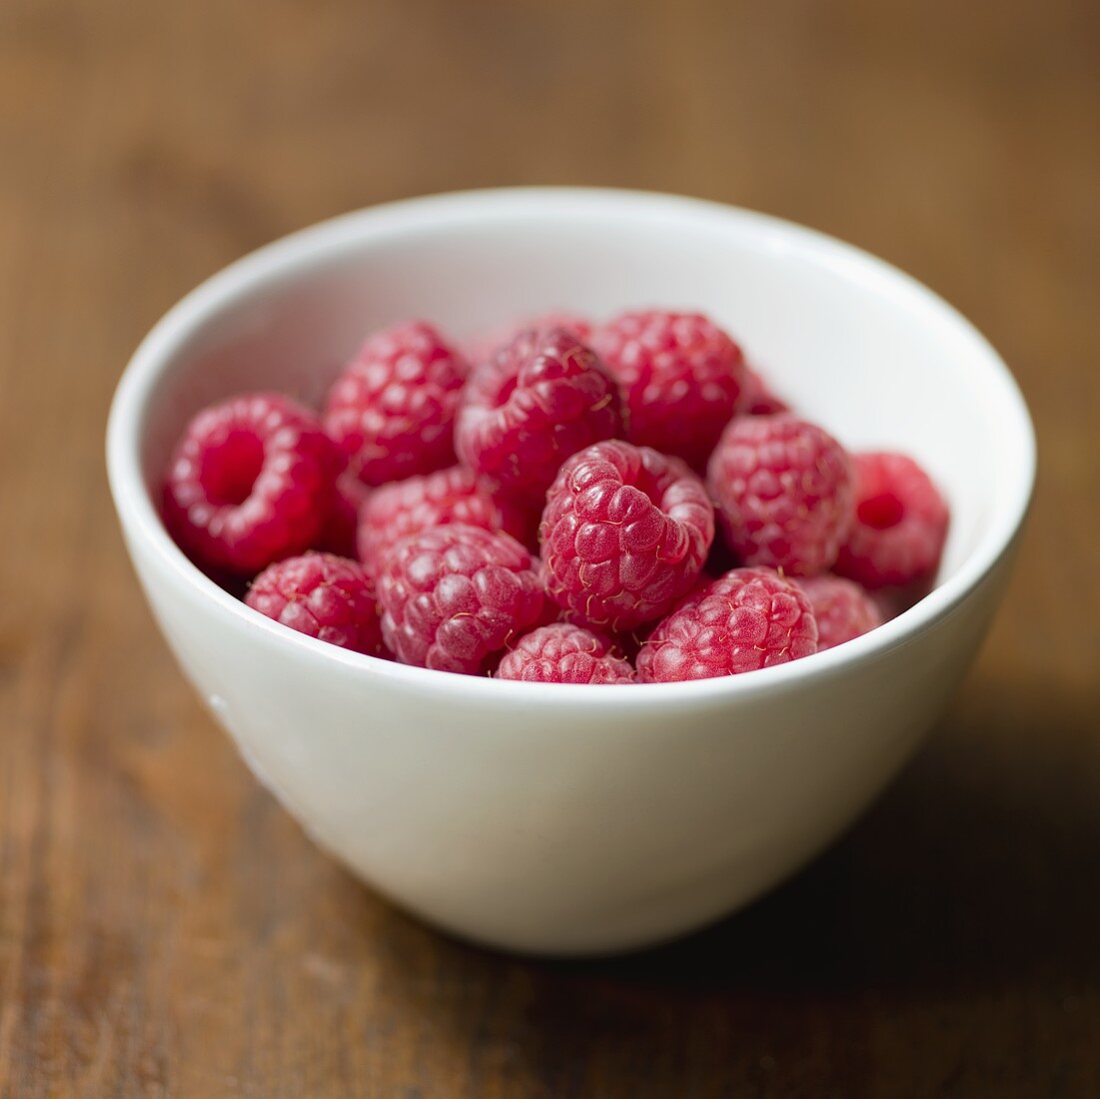 Fresh raspberries in a small ceramic bowl